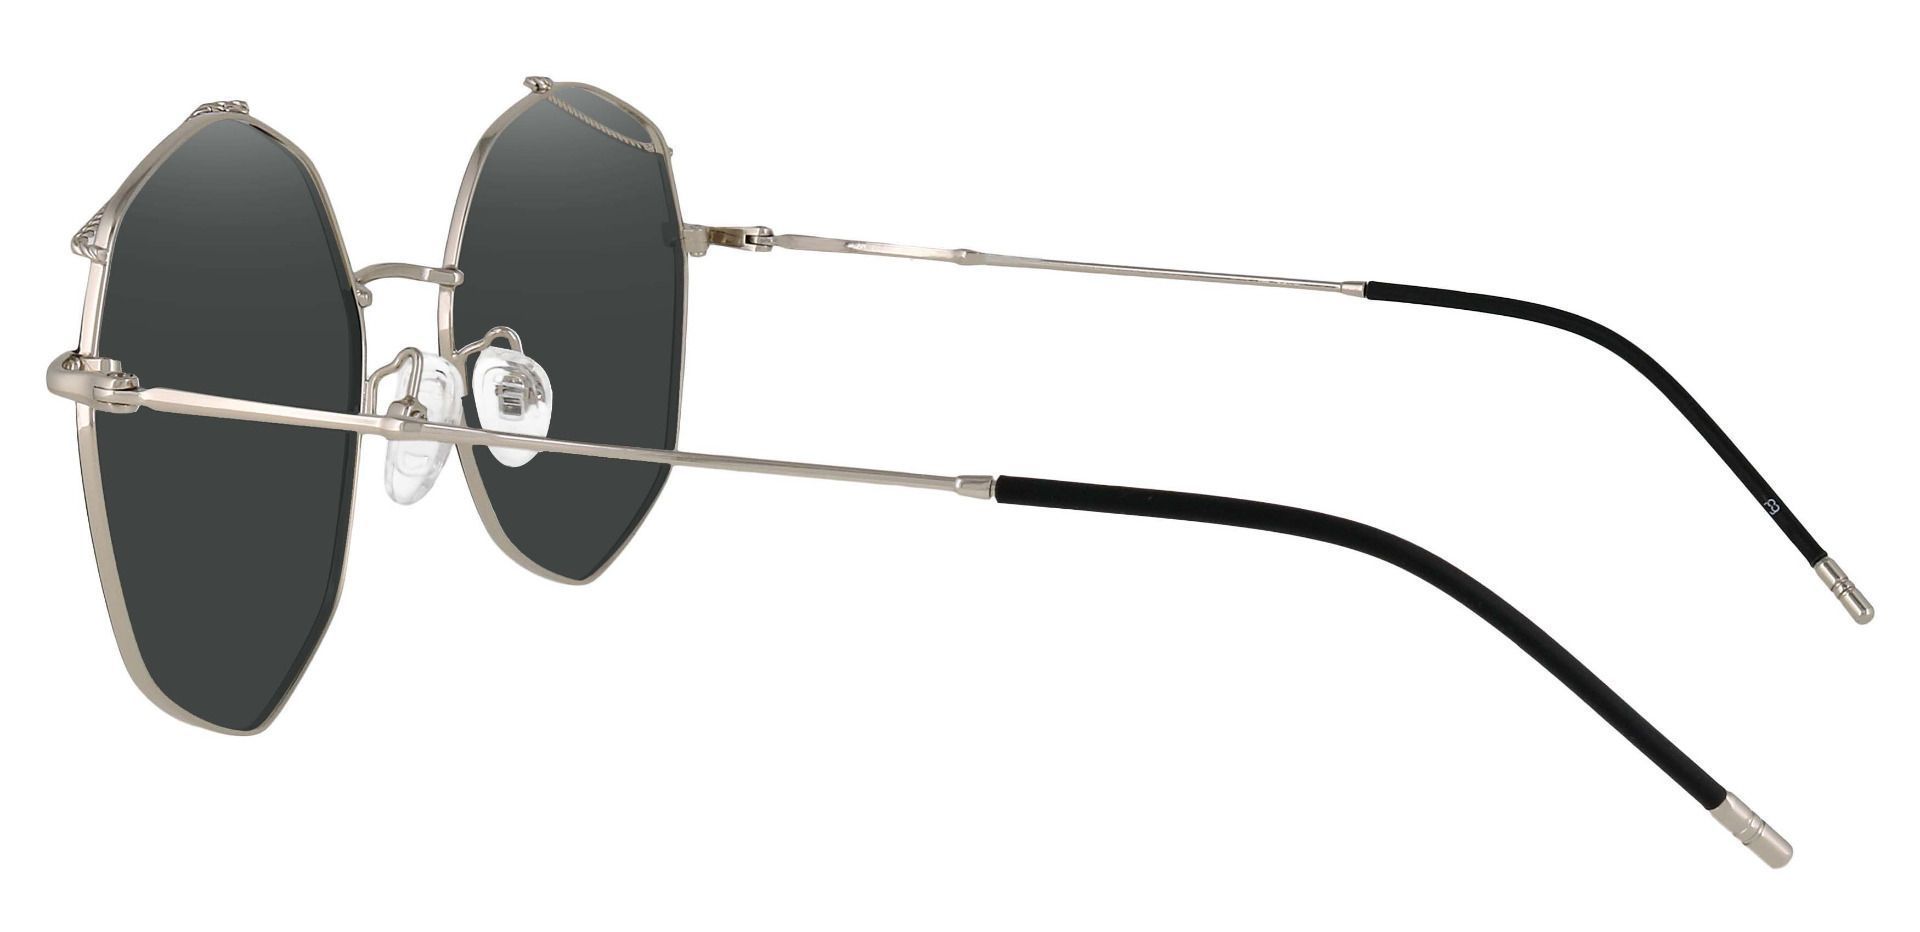 Tango Geometric Prescription Sunglasses - Black Frame With Gray Lenses